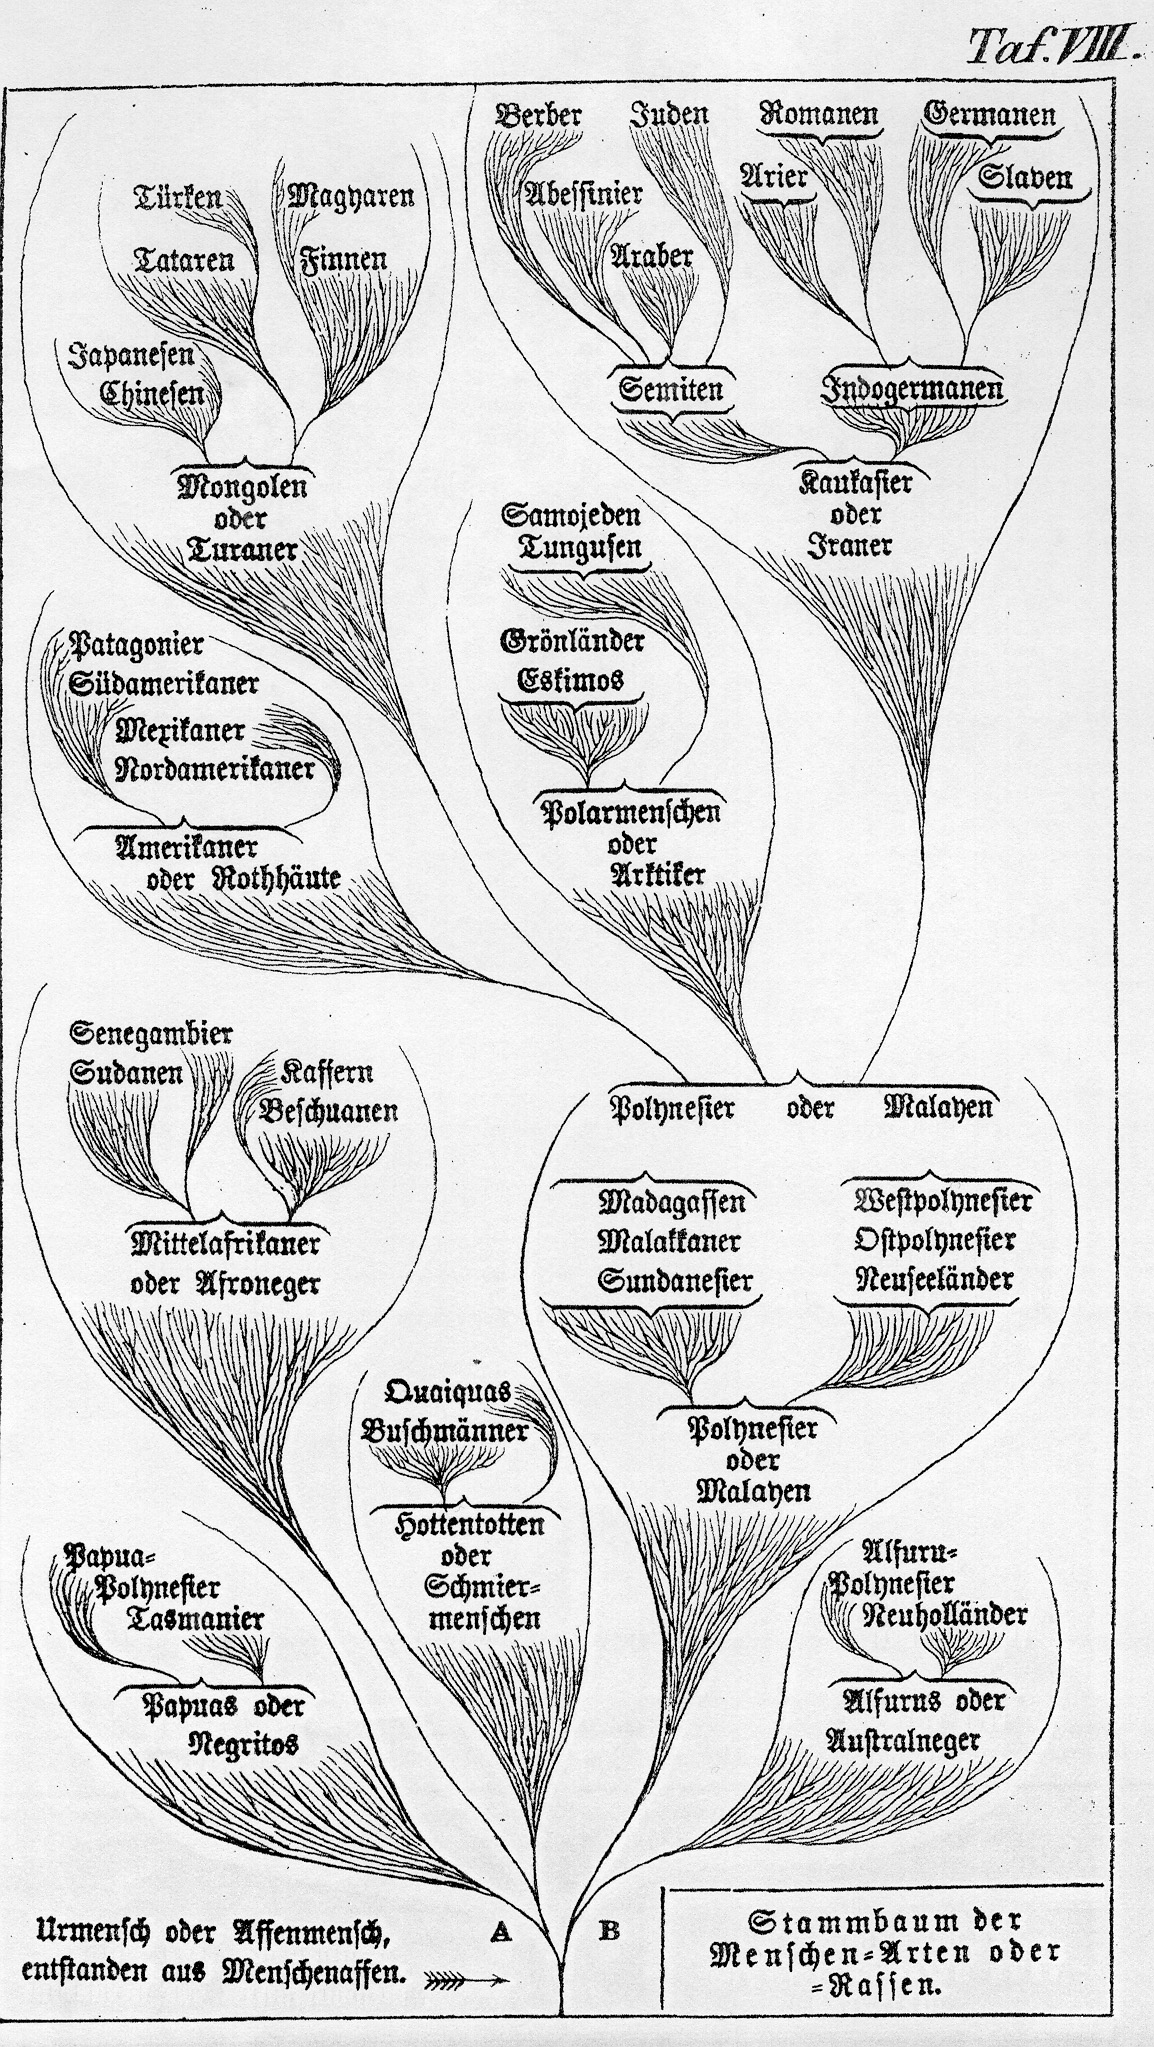 Family tree of human races